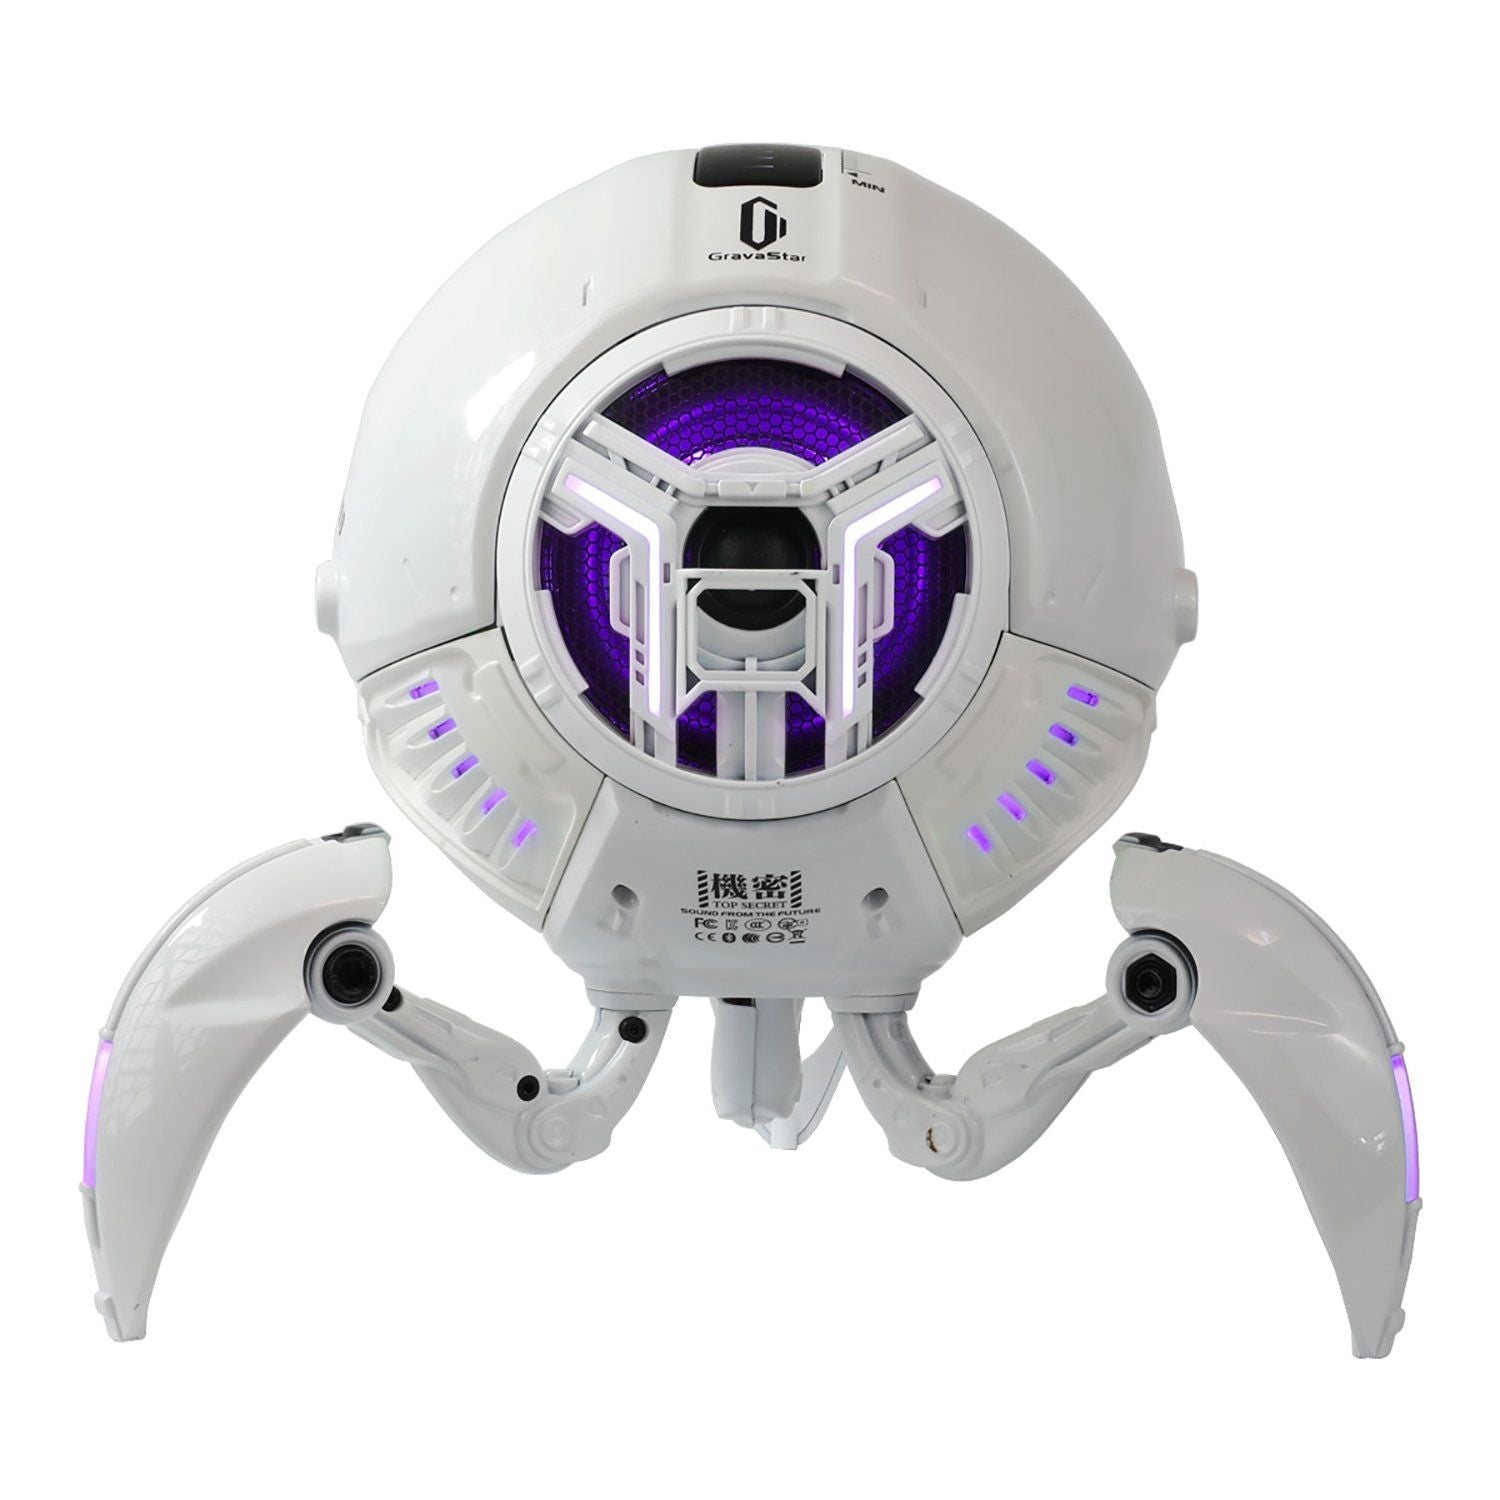 Gravastar Mars Pro Wireless Bluetooth 5.0 Dystopian Robotic Speaker Default Gravastar White 